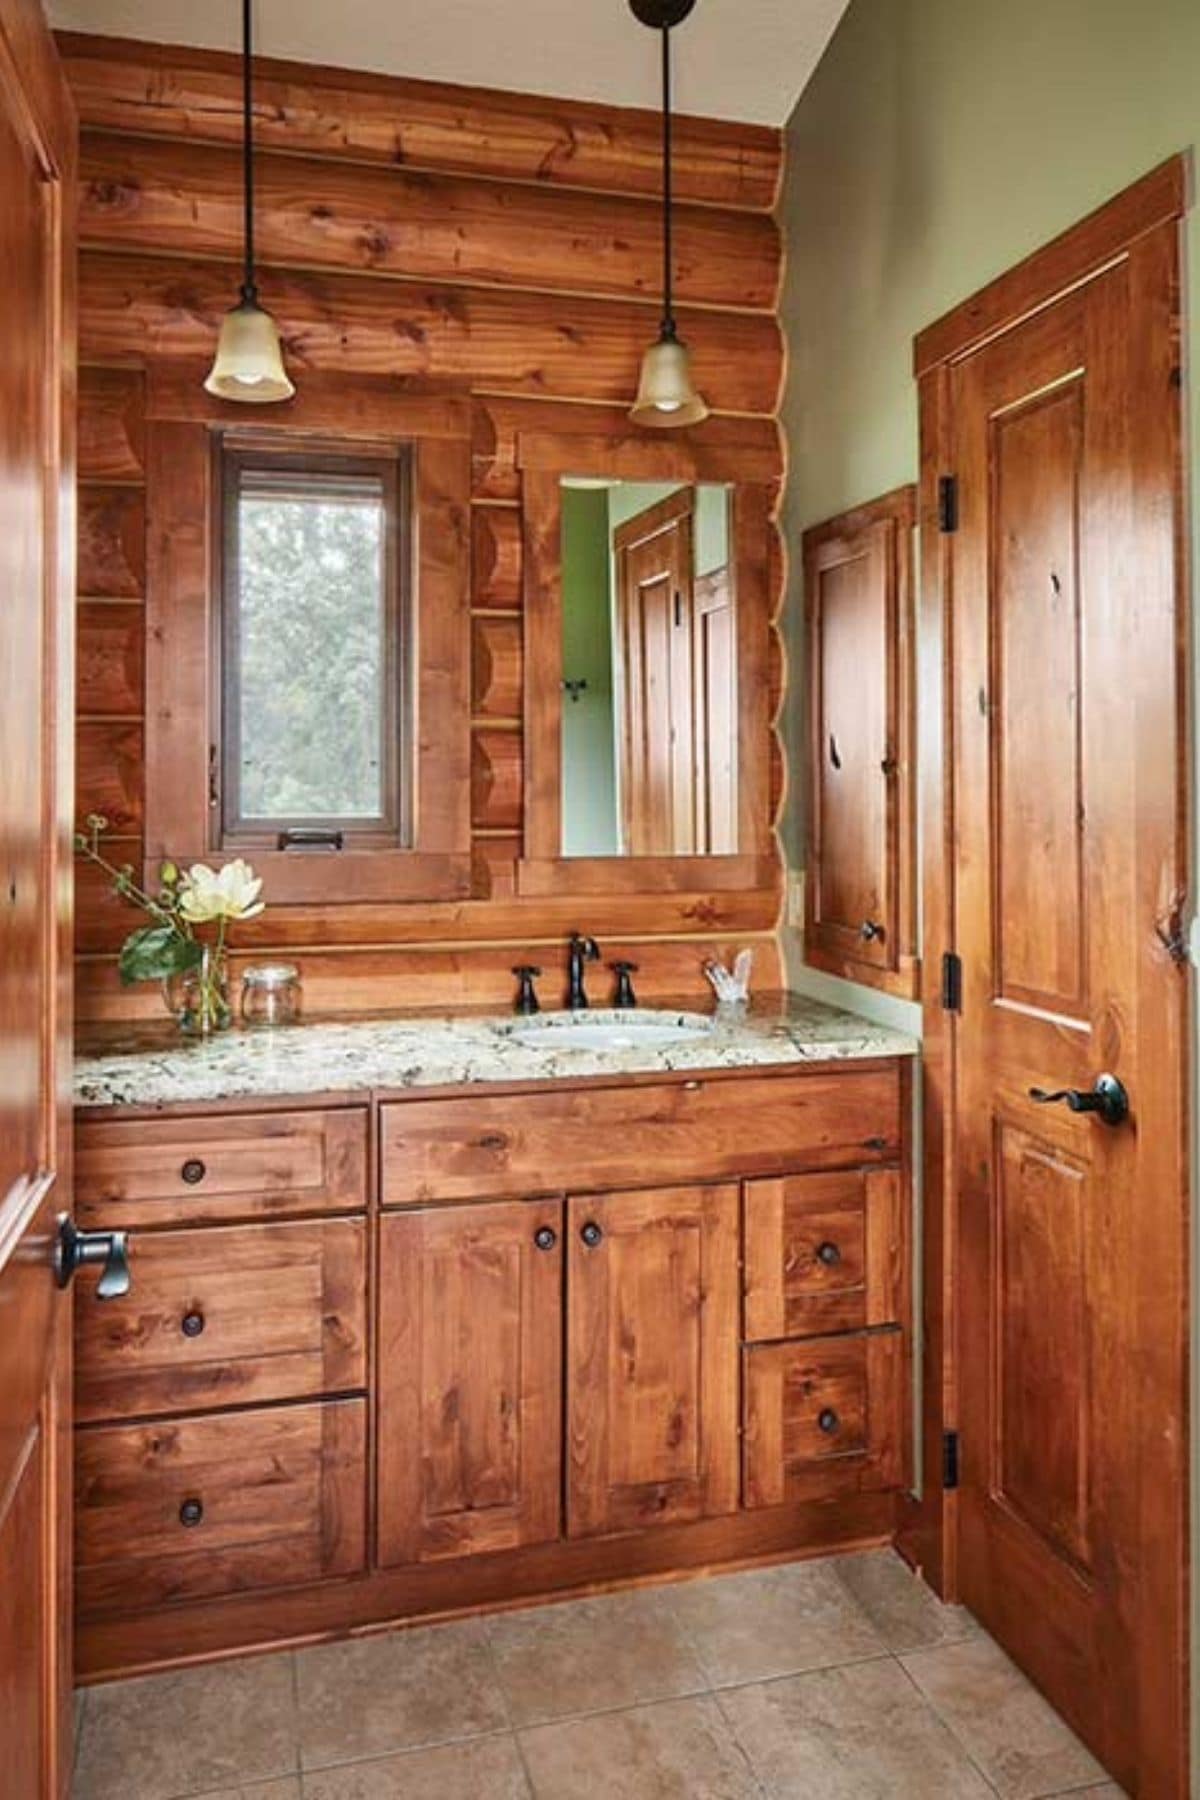 wood cabinets and doors under marble countertop in bathroom